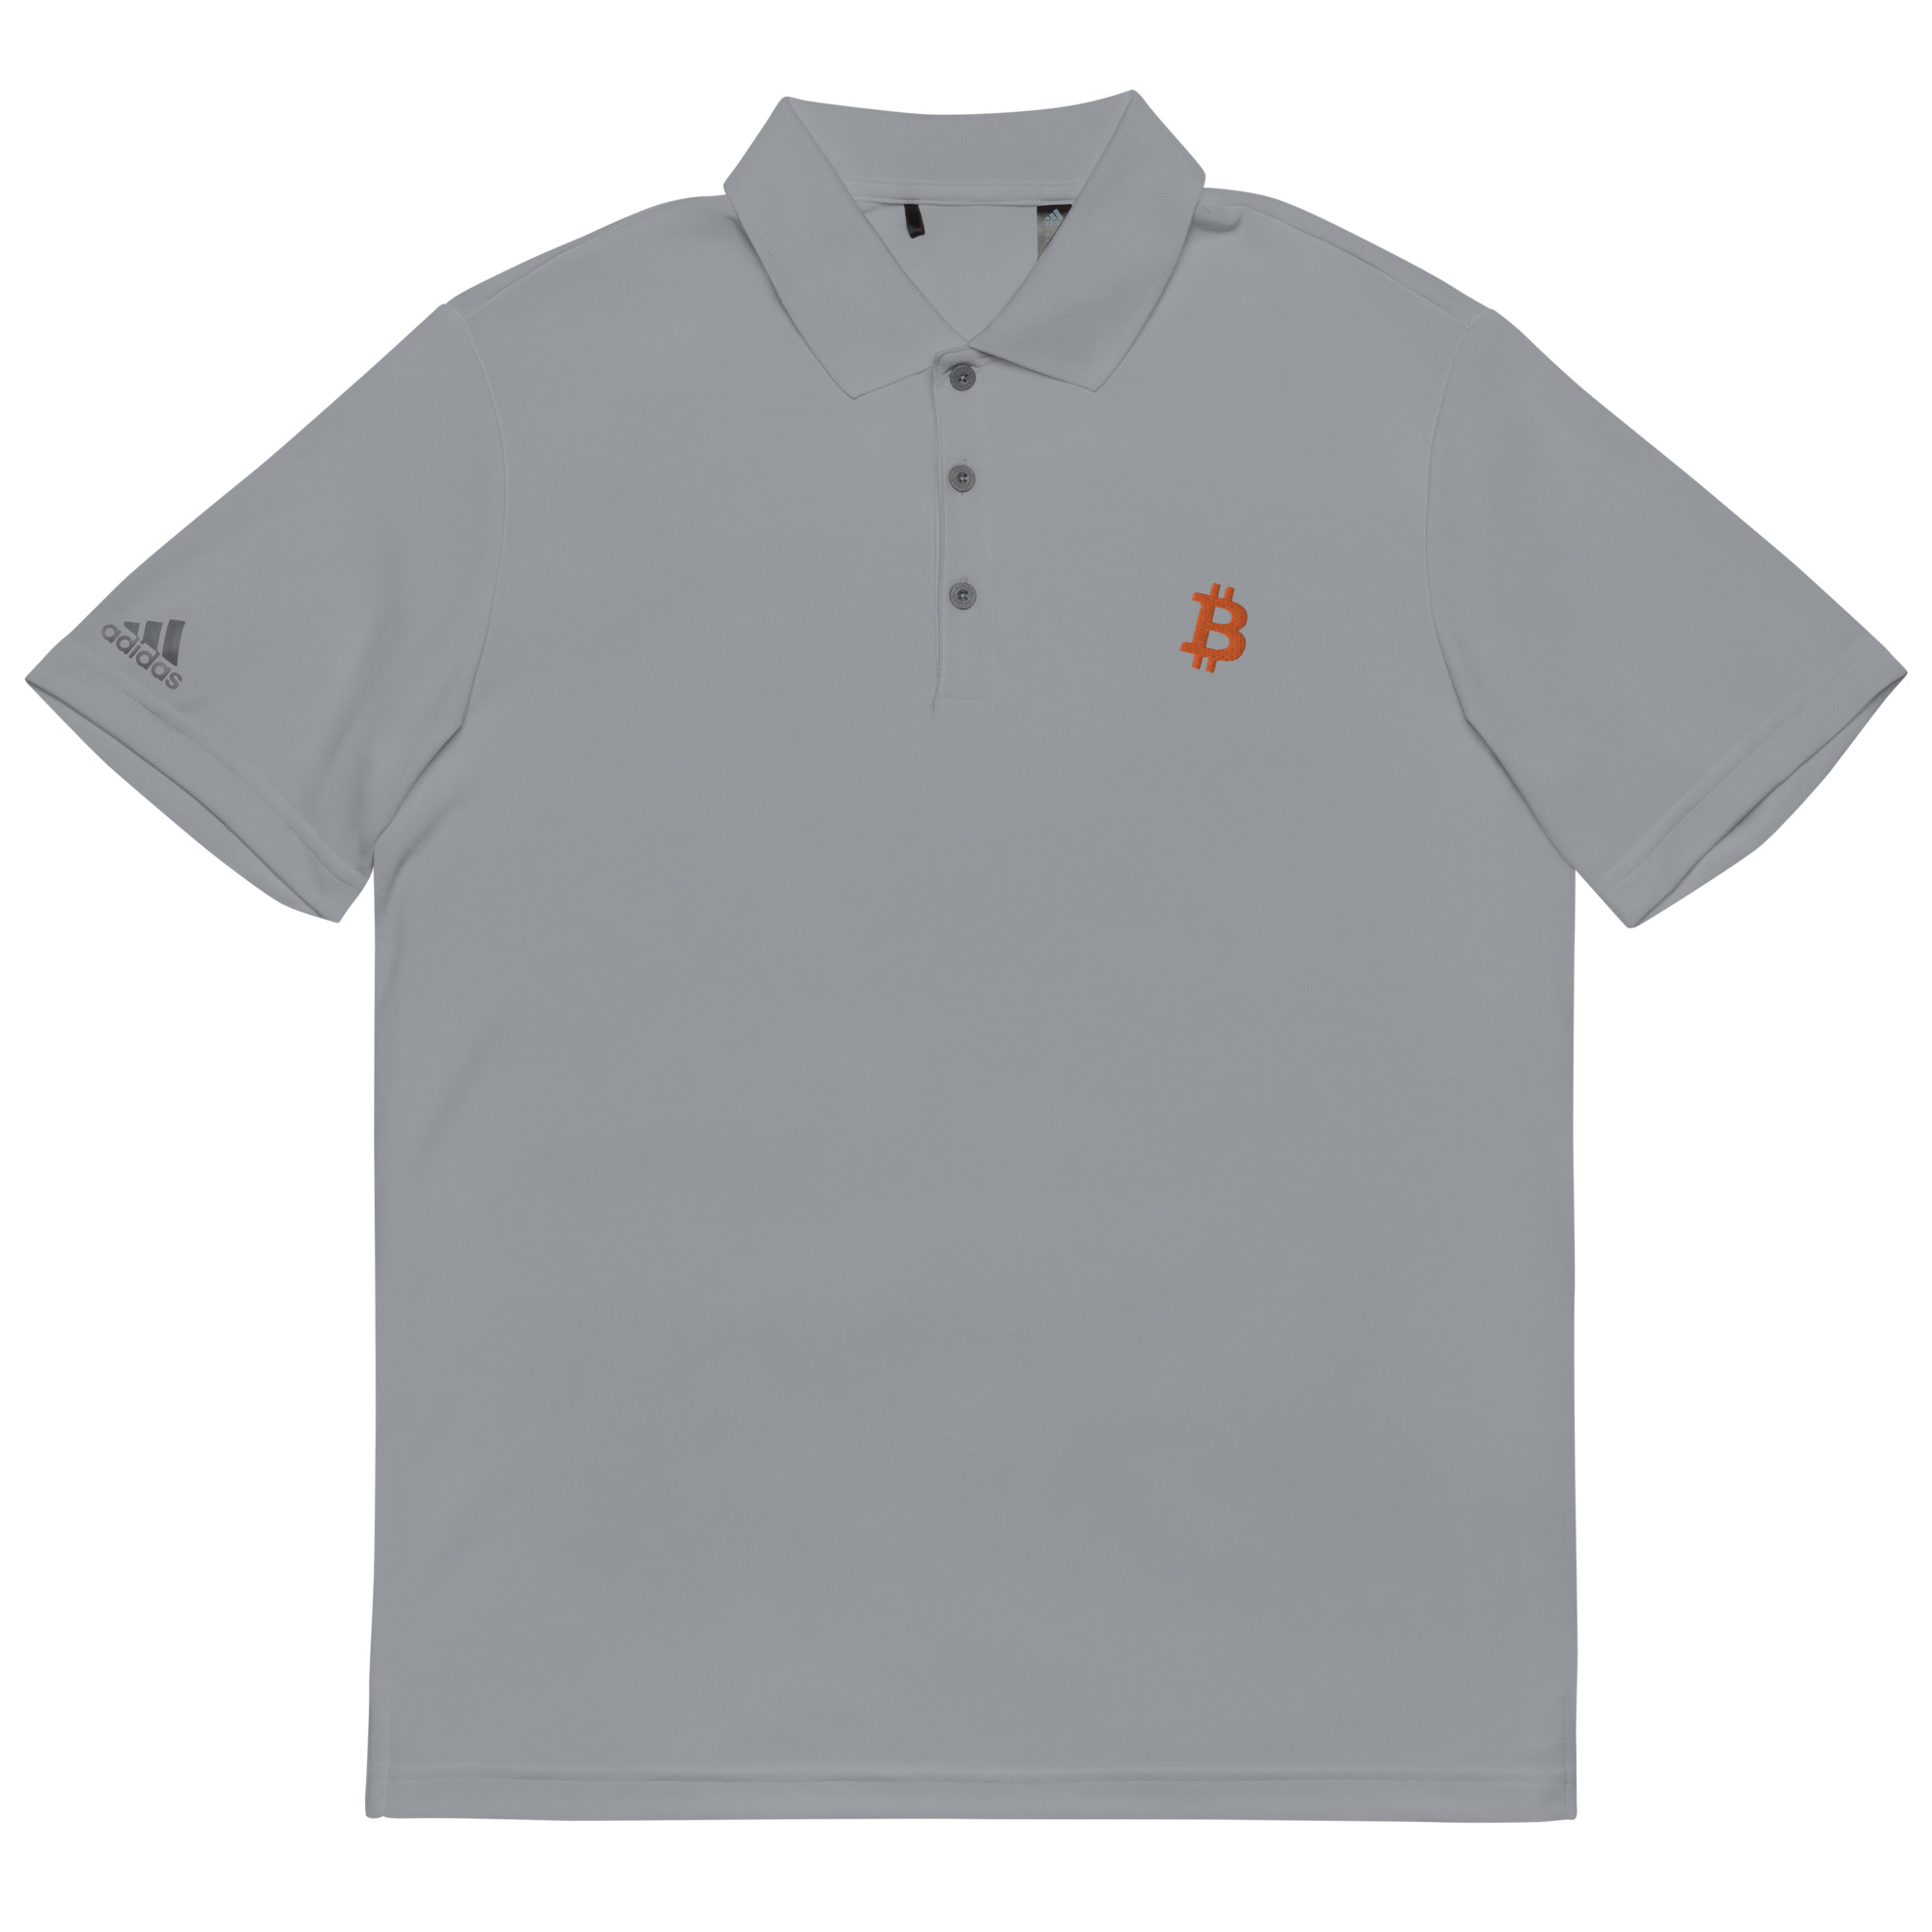 Bitcoin shirt - bitcoin adidas polo shirt lying flat - Gray bitcoin polo shirt